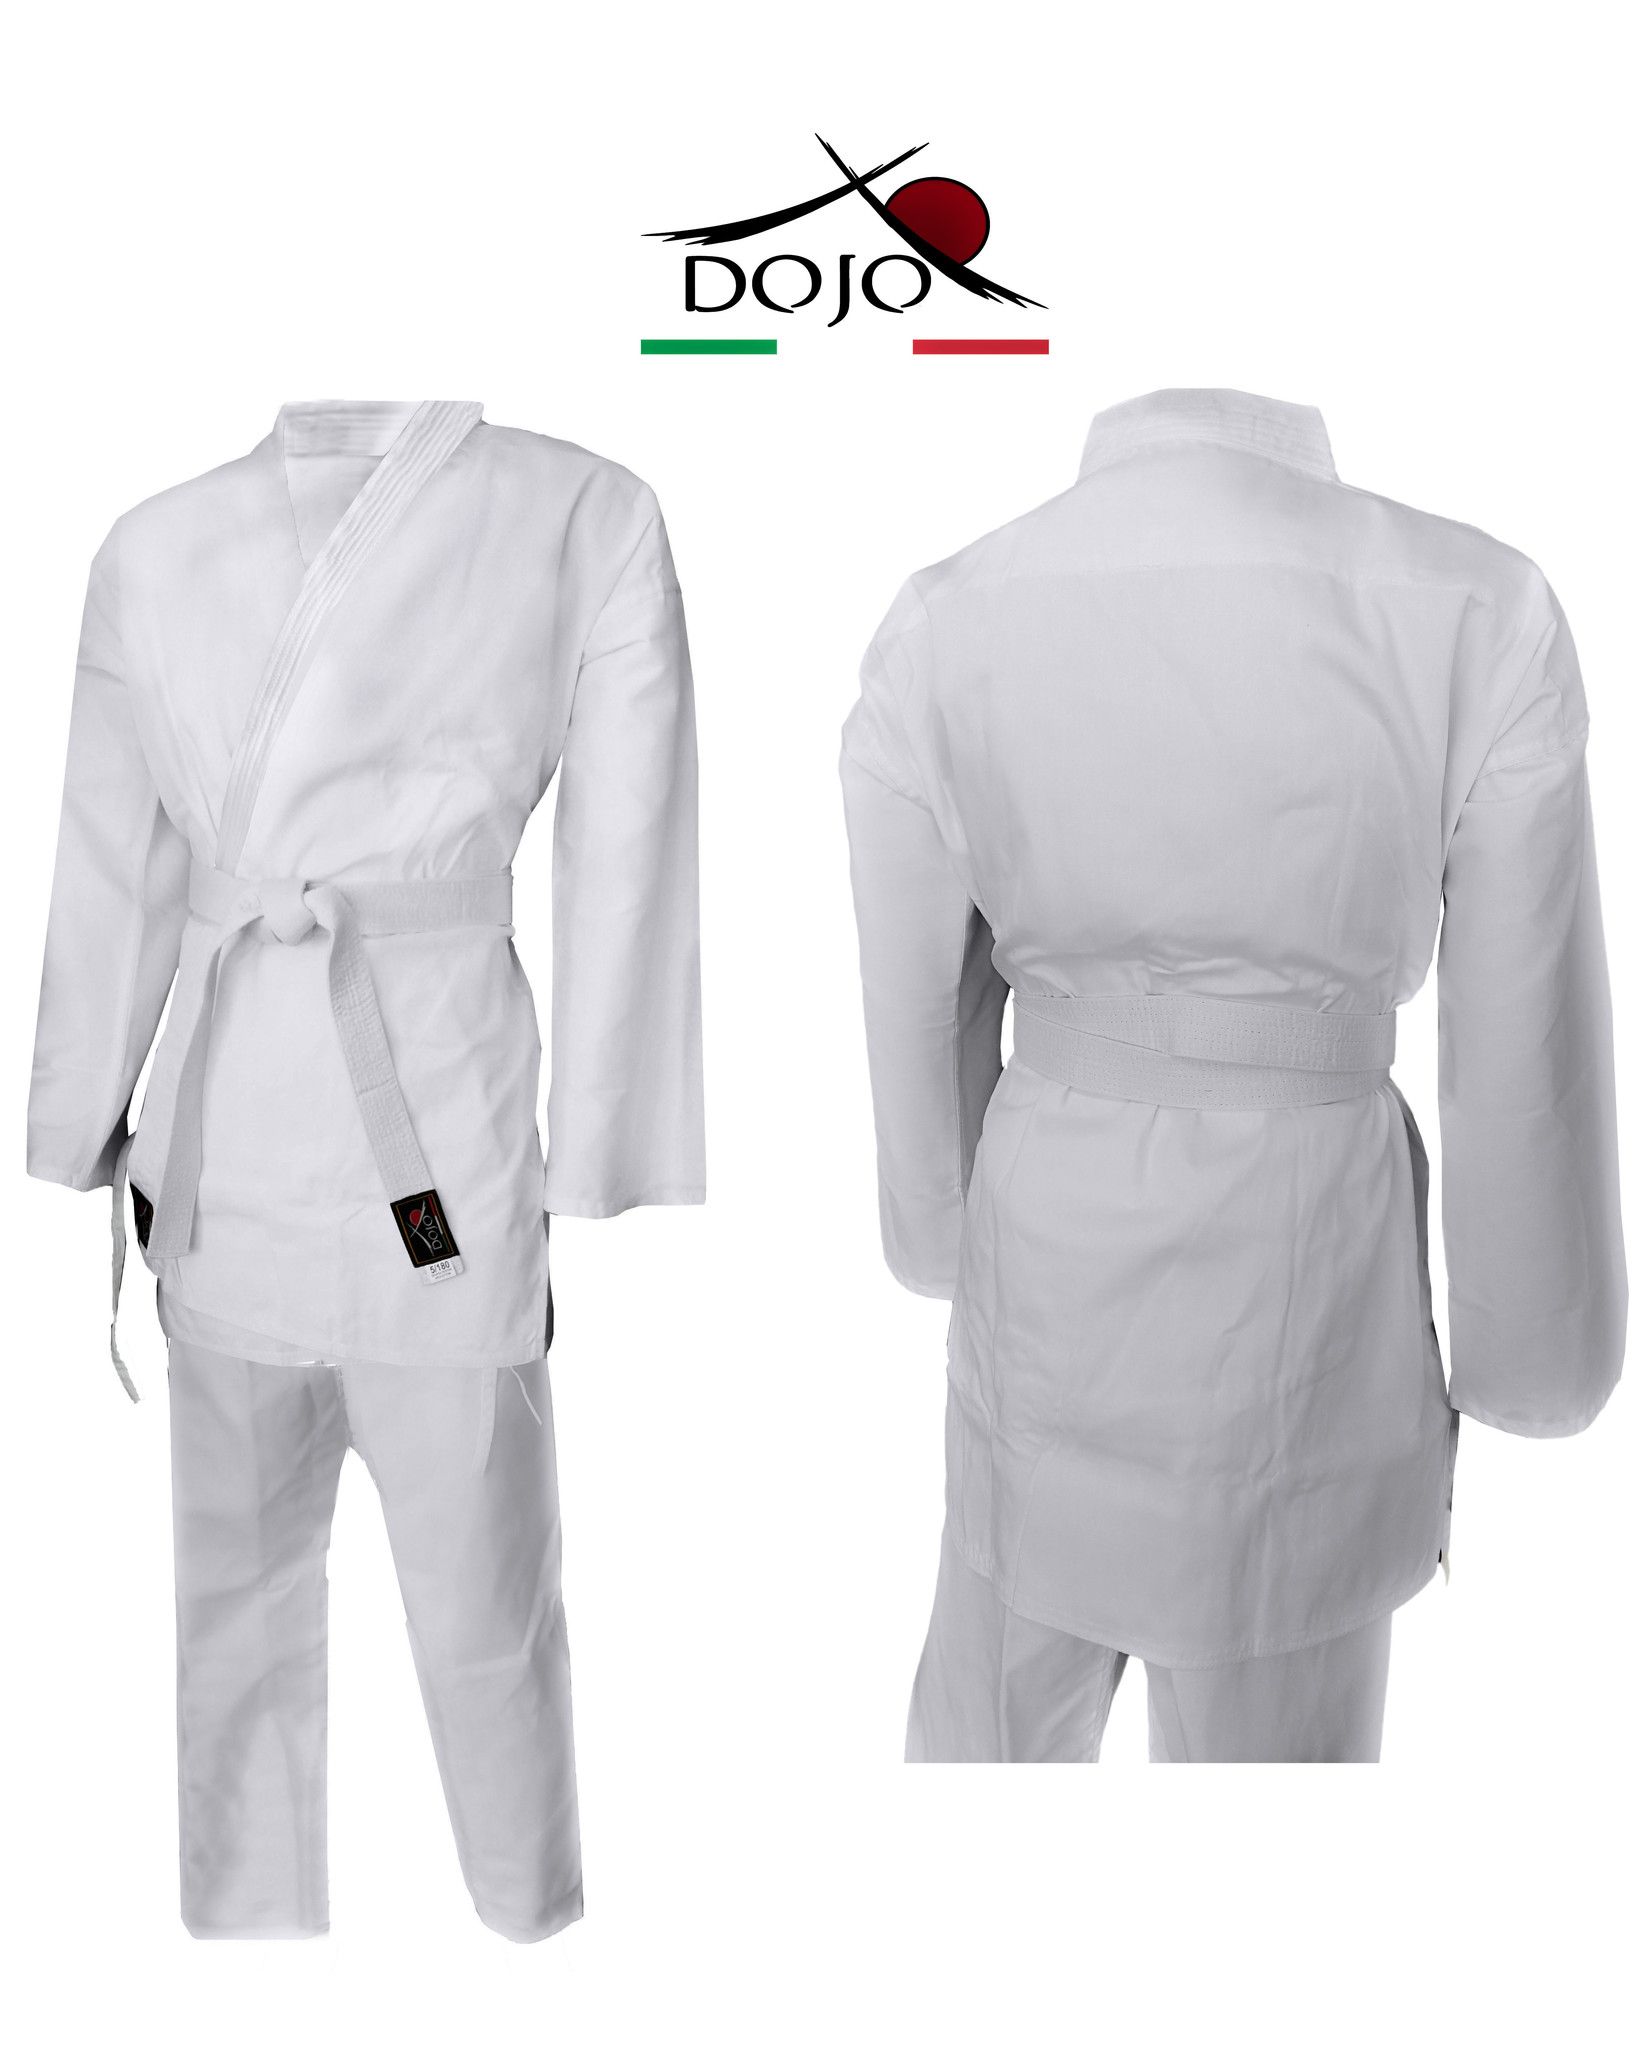 Dojo - Karategi Uniforme per Karate Training per allenamento bambini e adulti per Karate